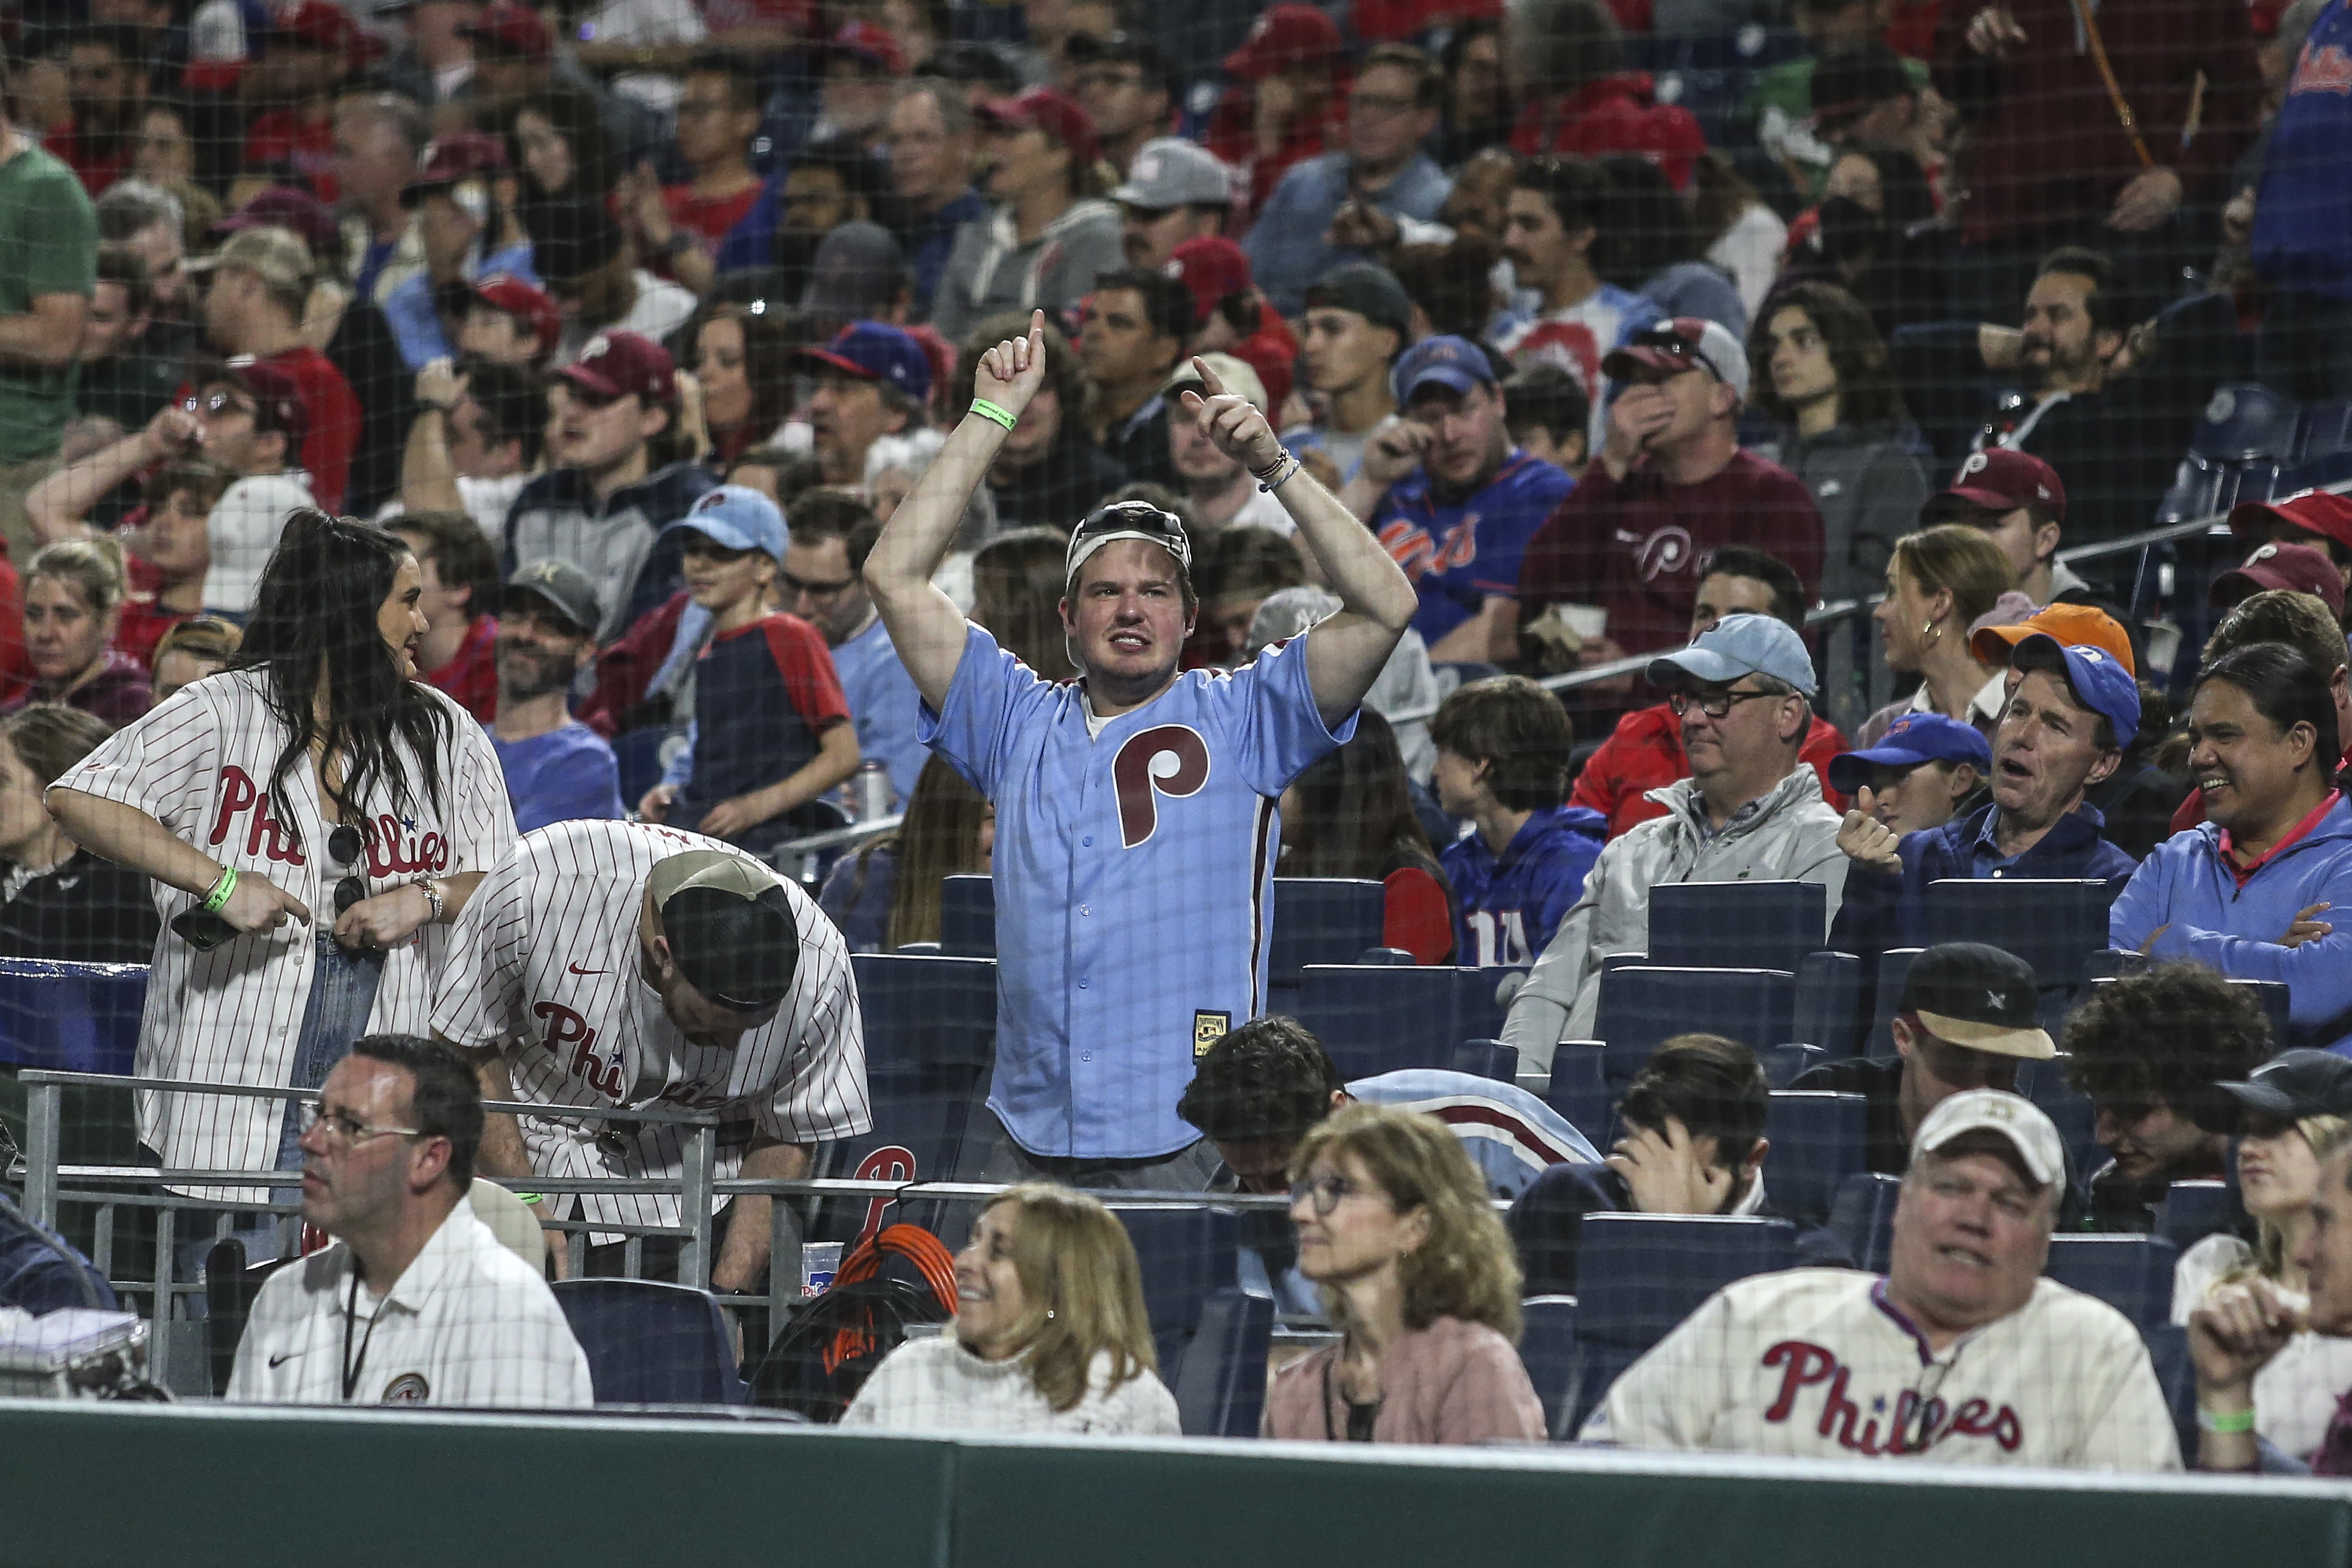 Joe Girardi was hurt to lose Yankees job, but says he loves the Phillies